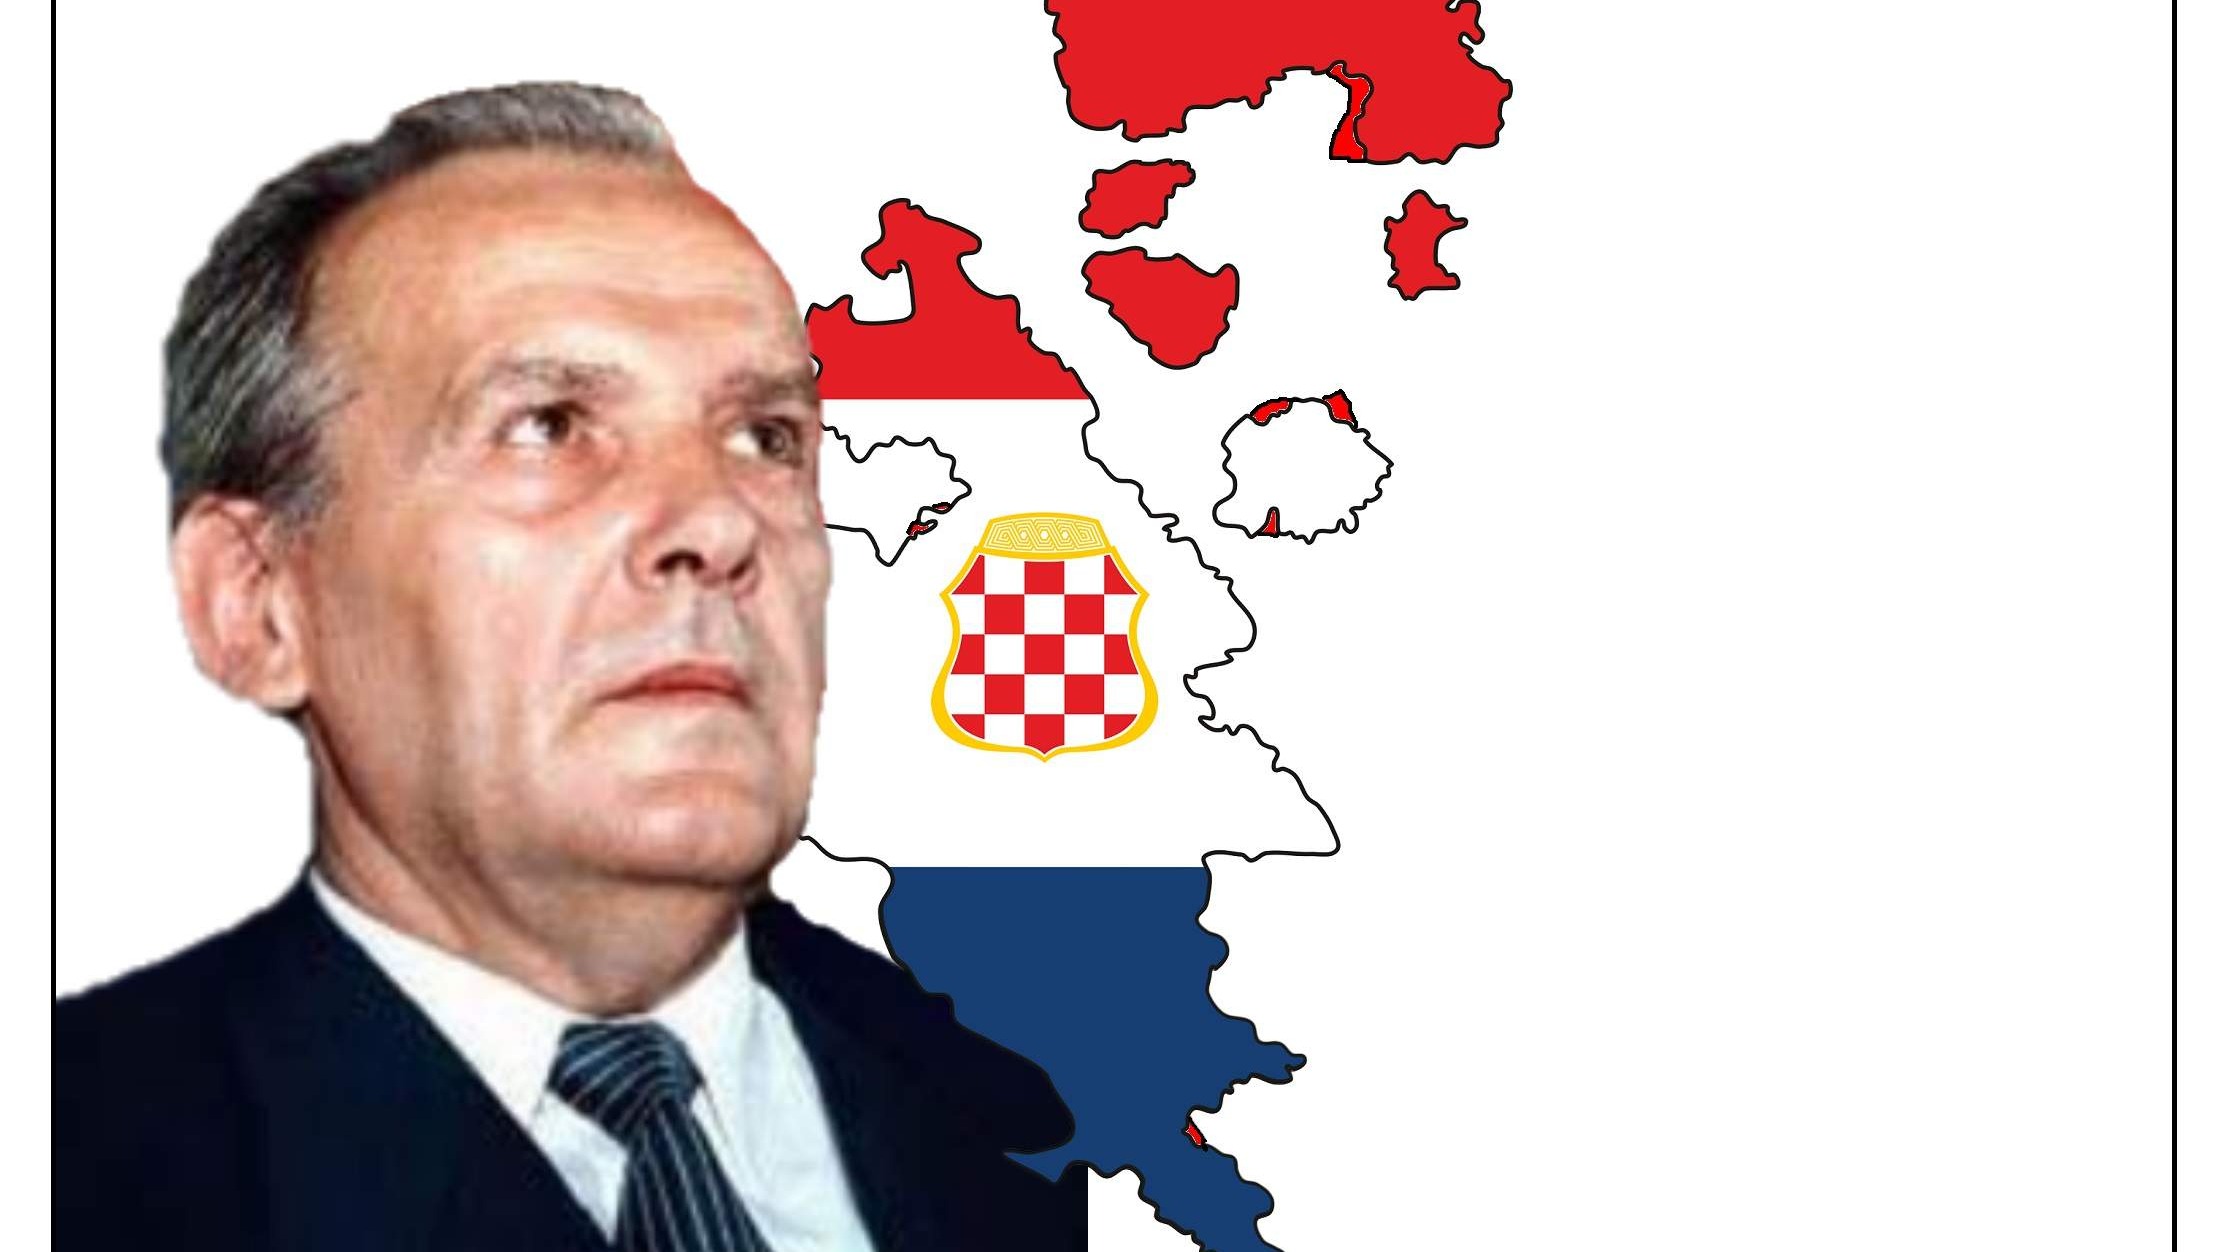 (A) Kome ne smeta Herceg-Bosna!? 